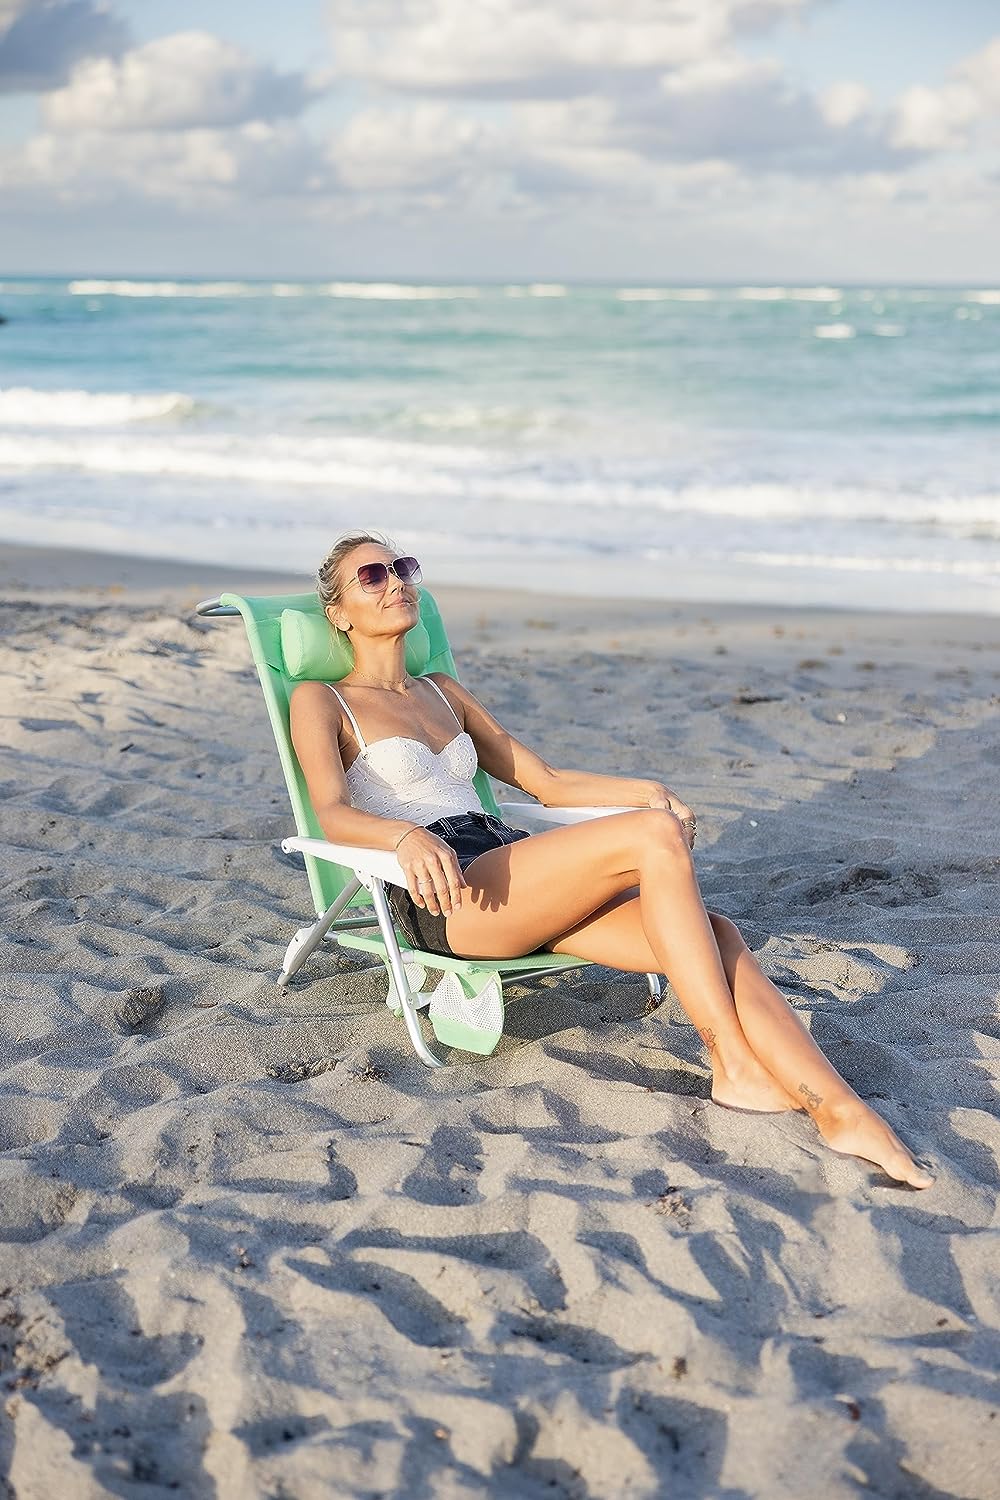 BUOY BEACH Lay Flat Beach Chair, Lightweight and Sturdy Design - Teal